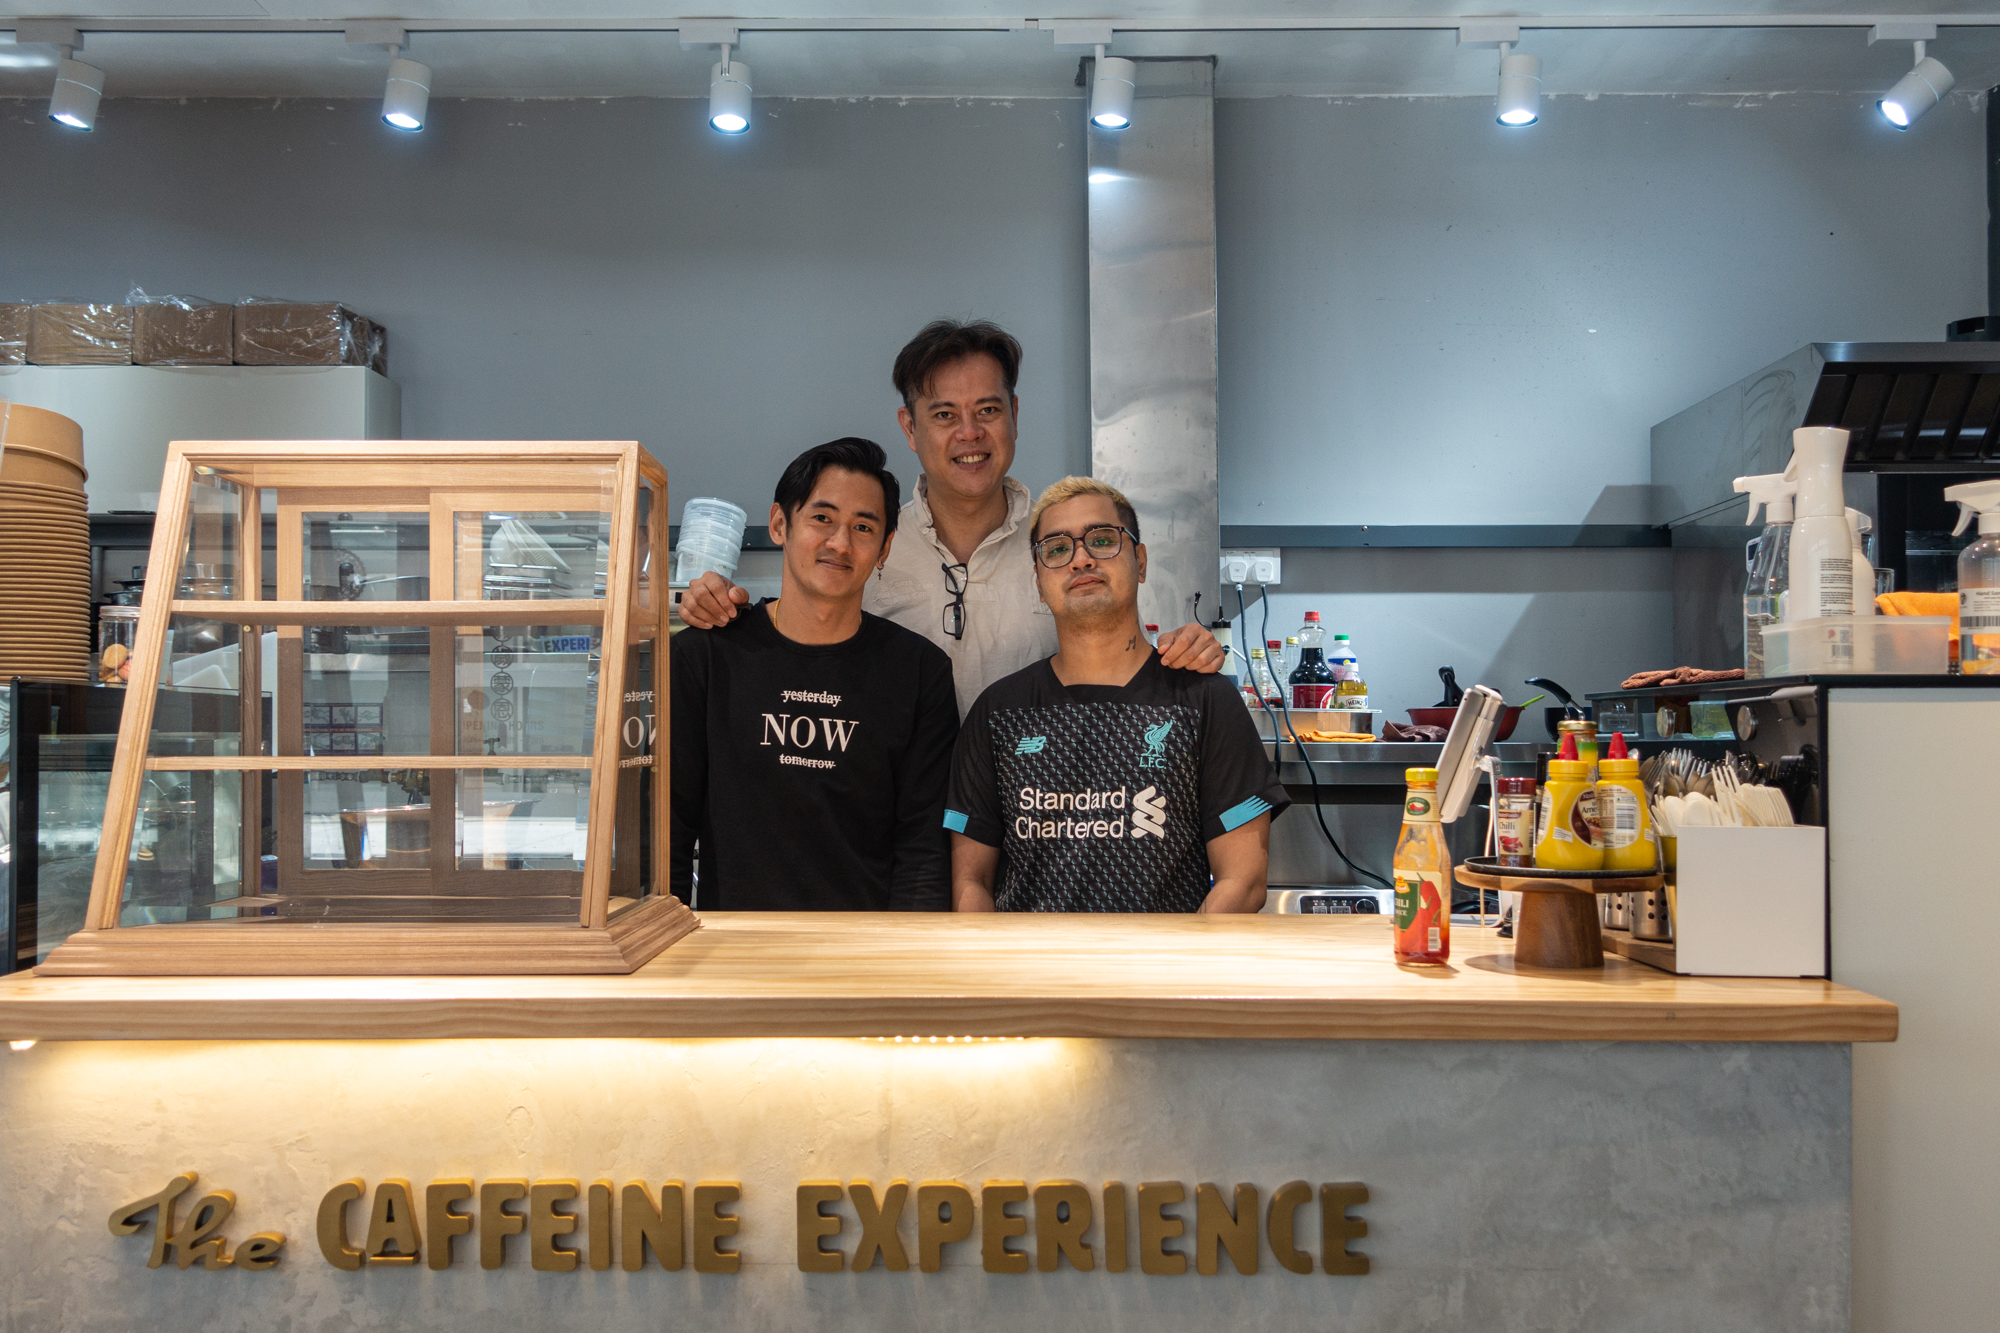 Saulvinton Yeow, Matthew Poh, and Shariff Hussain at The Caffeine Experience